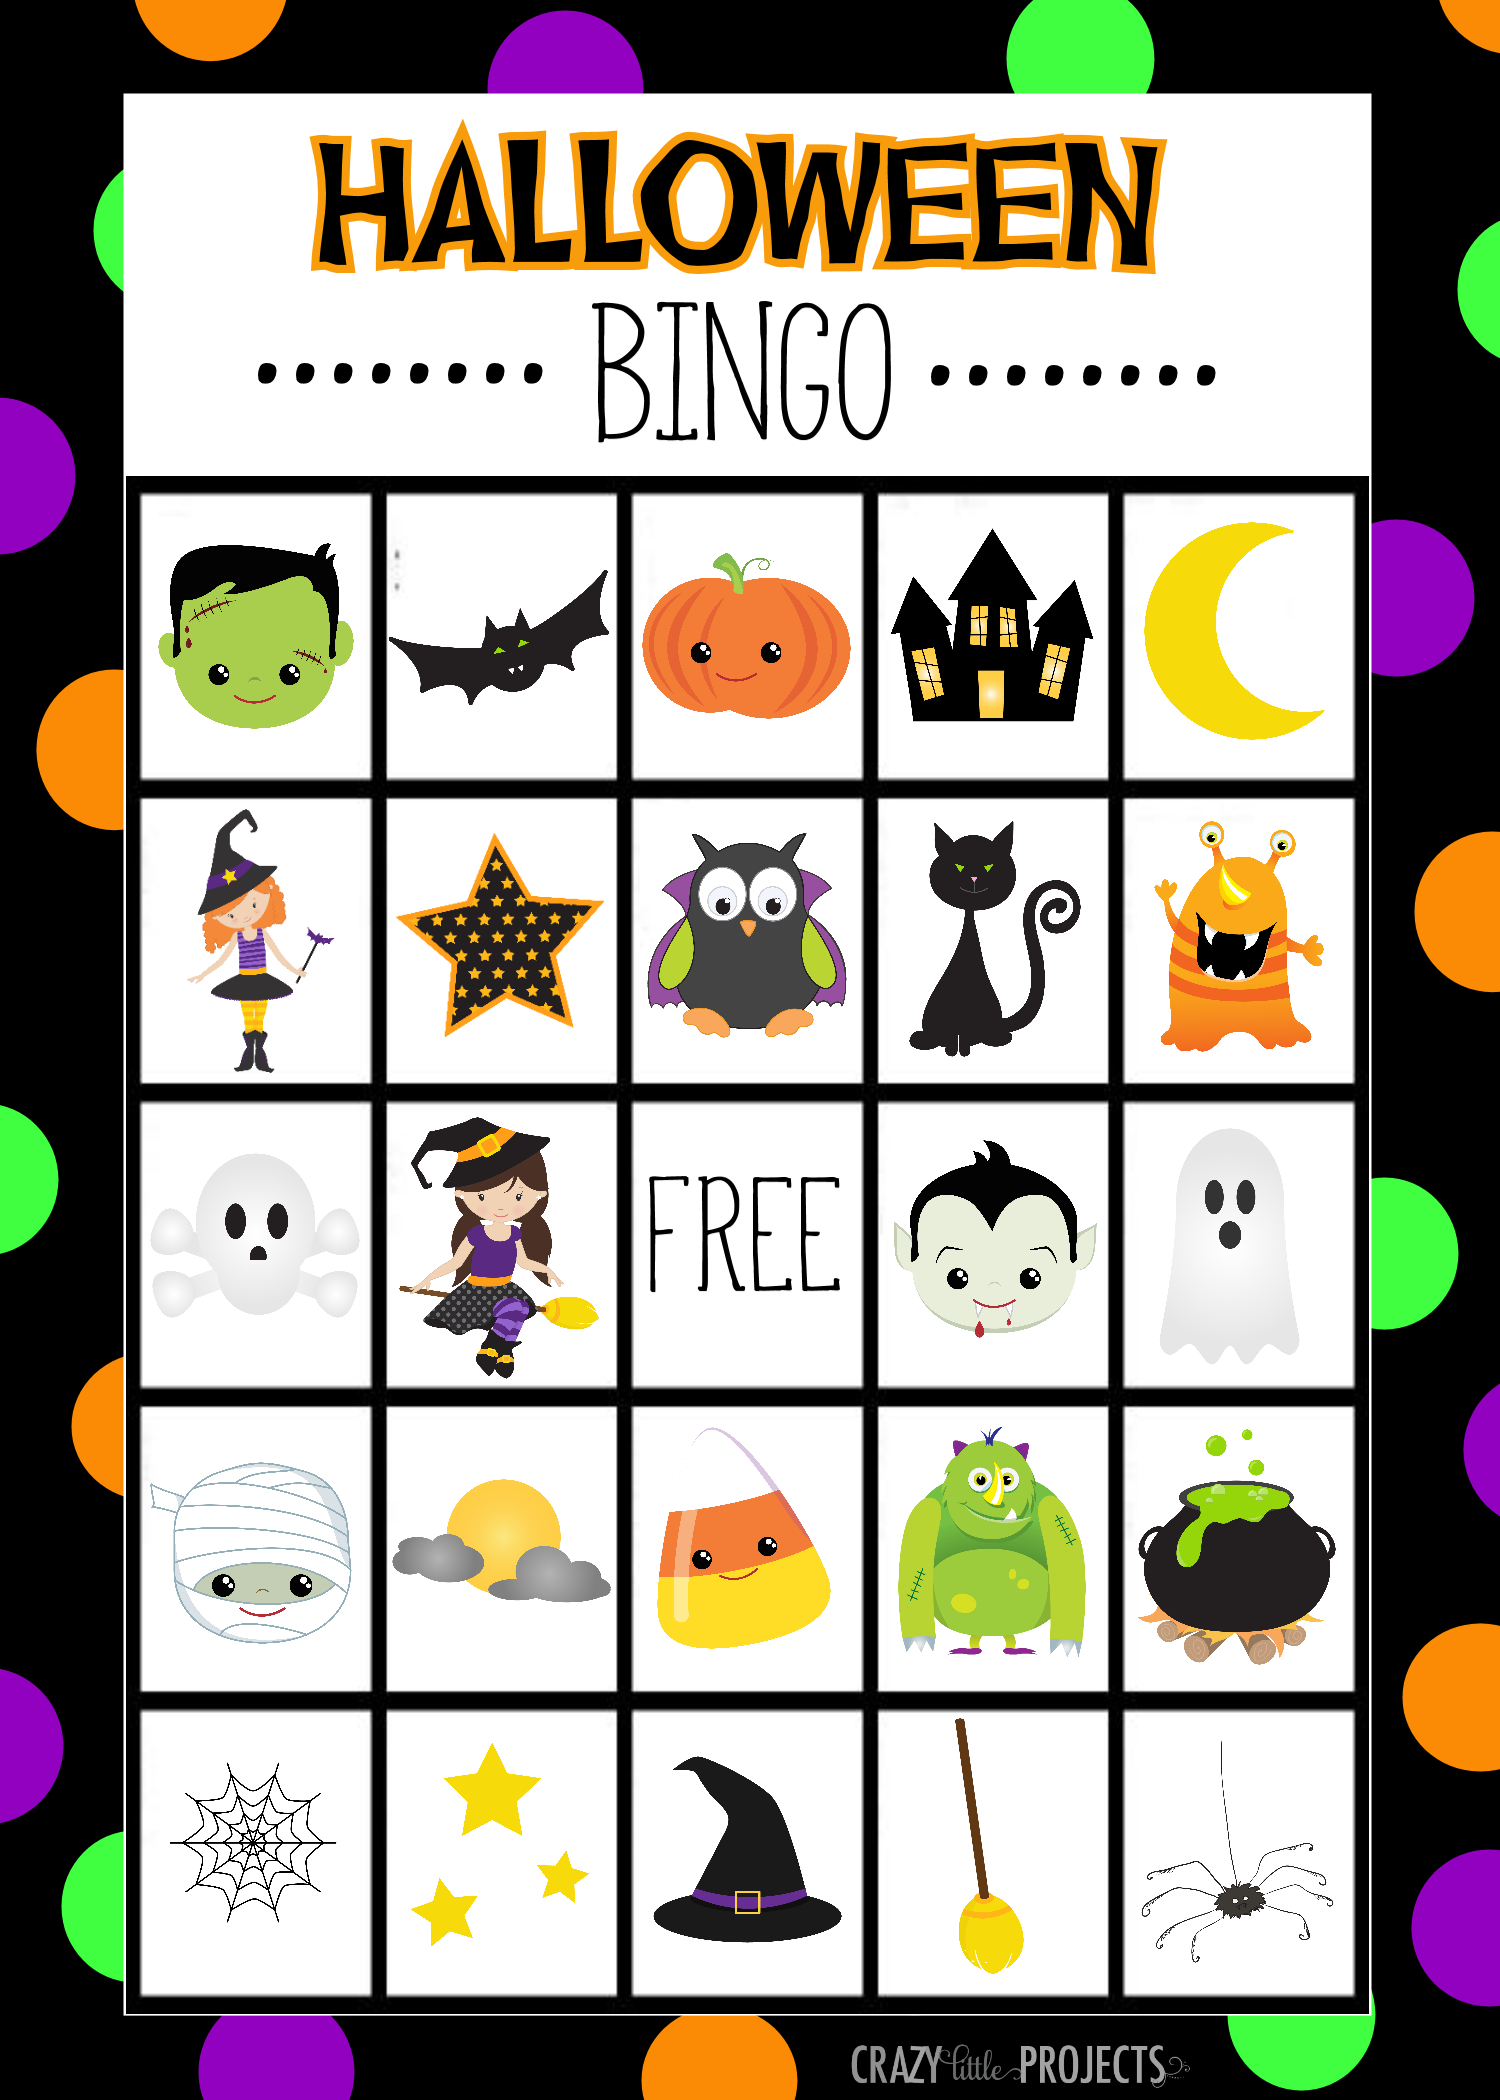 Halloween Bingo - Cute Free Printable Game | Halloween | Pinterest - Free Printable Halloween Party Games